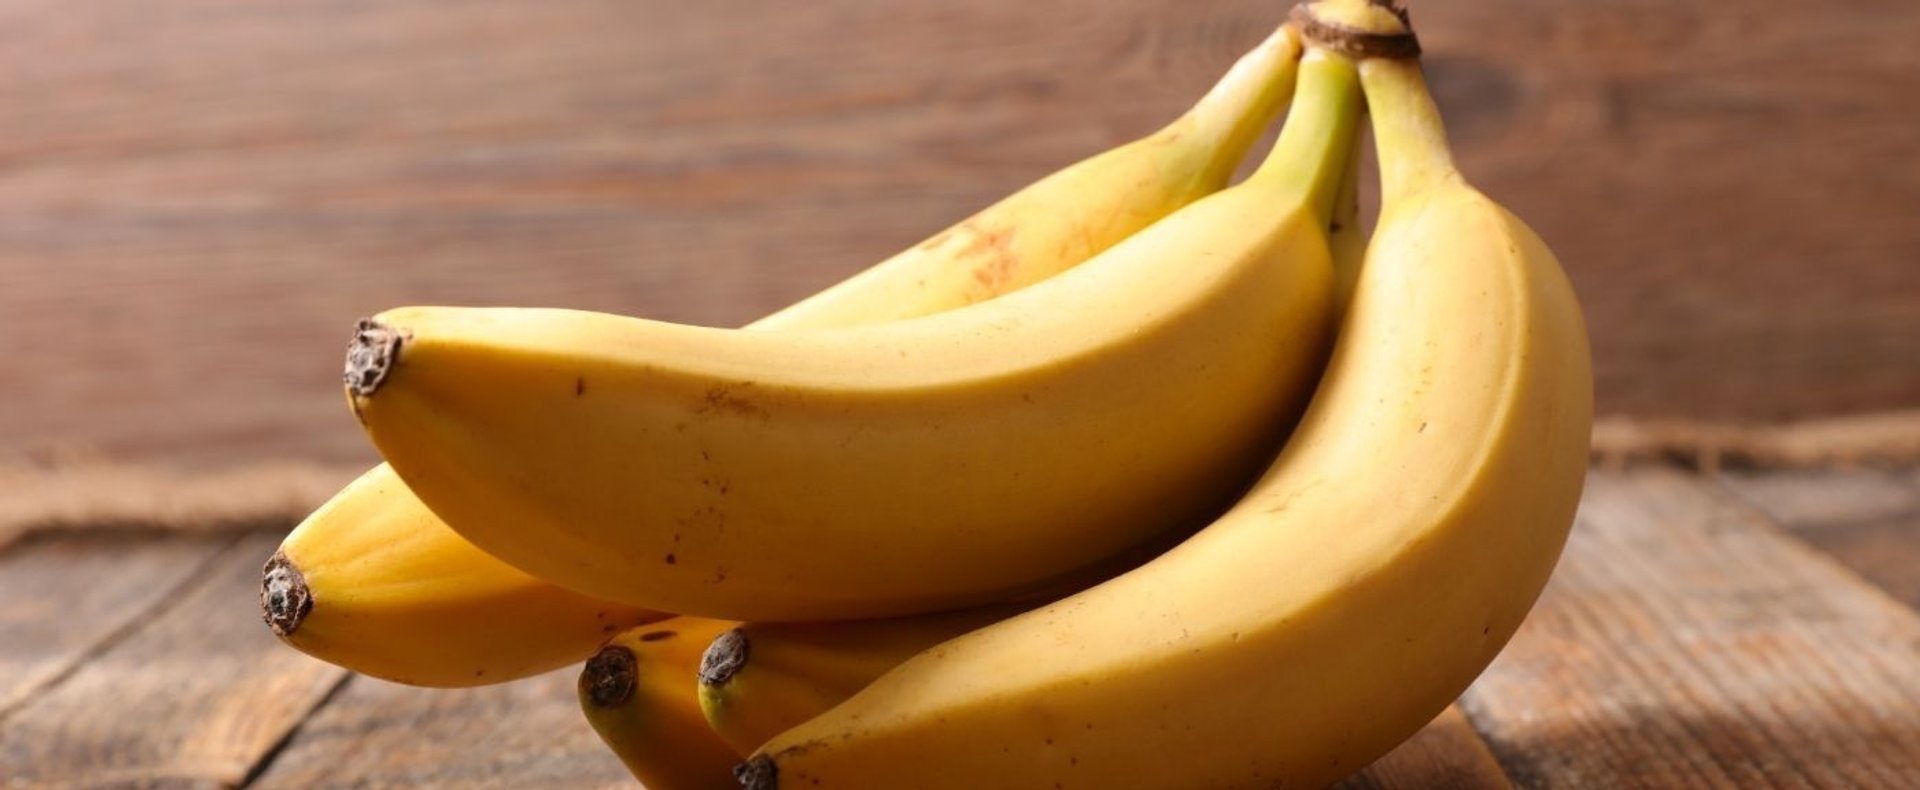 Banany ba zdrowie